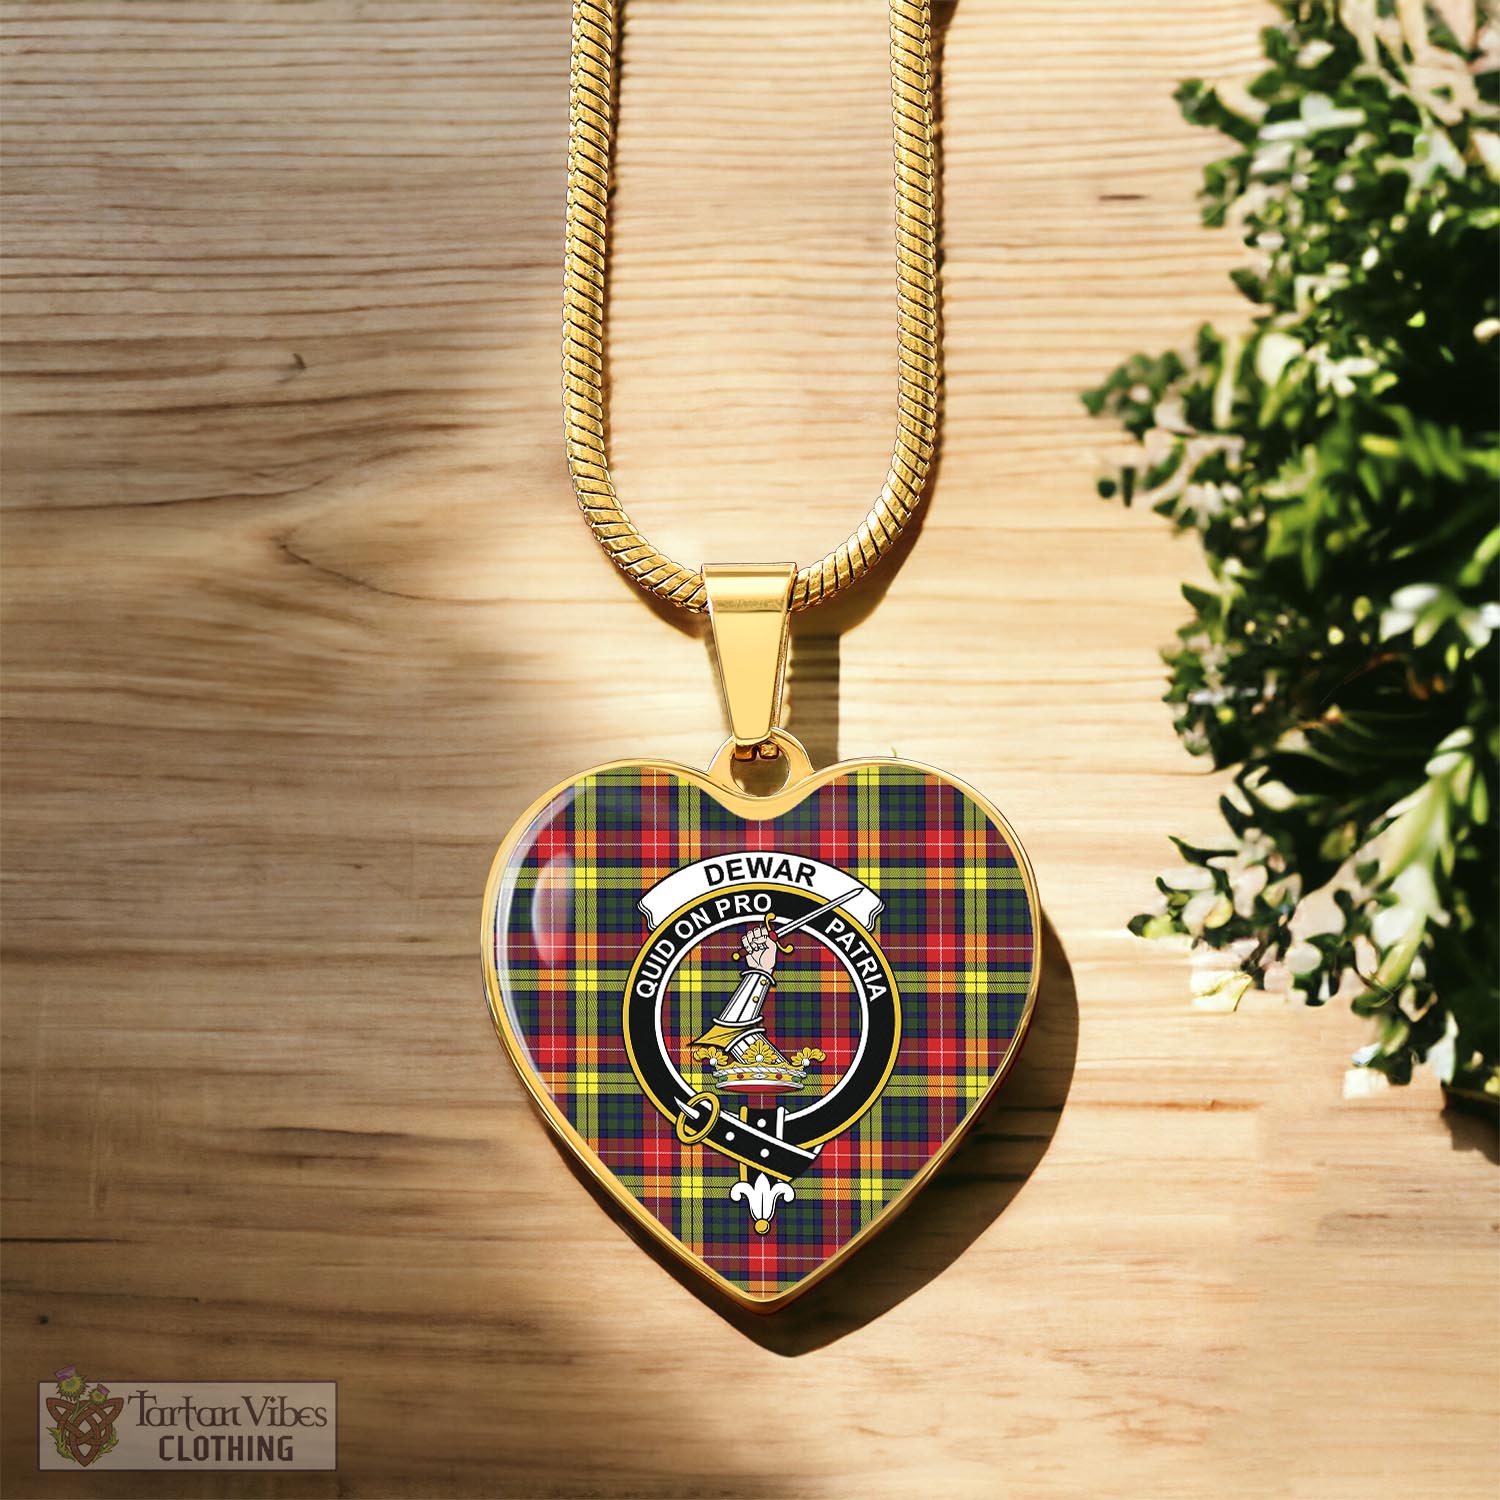 Tartan Vibes Clothing Dewar Tartan Heart Necklace with Family Crest